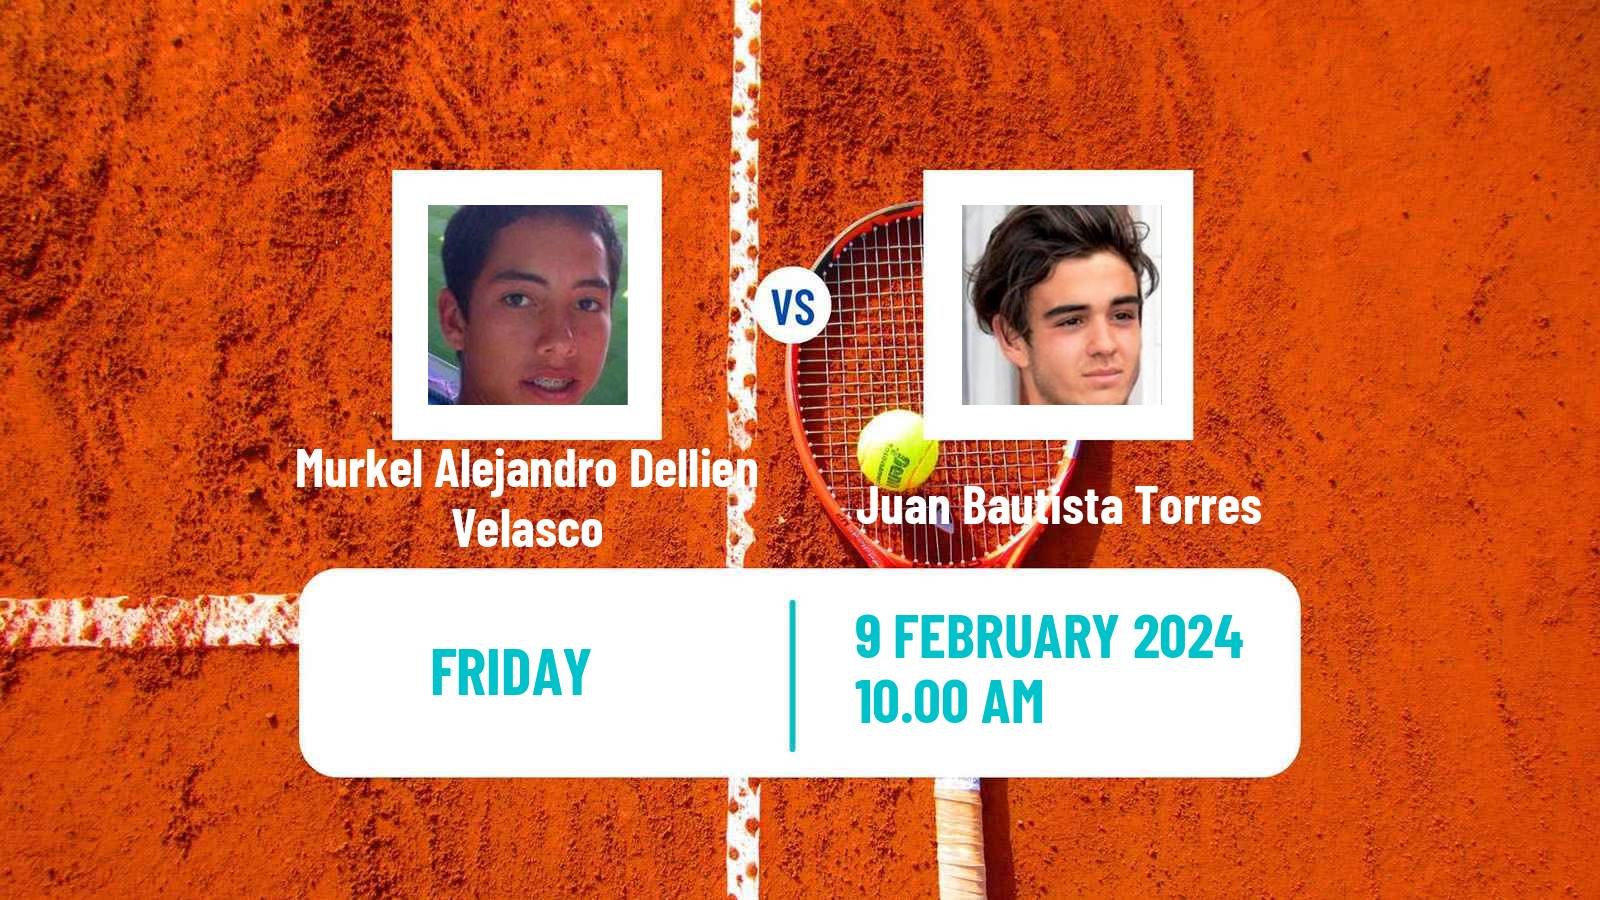 Tennis ITF M25 Punta Del Este Men Murkel Alejandro Dellien Velasco - Juan Bautista Torres